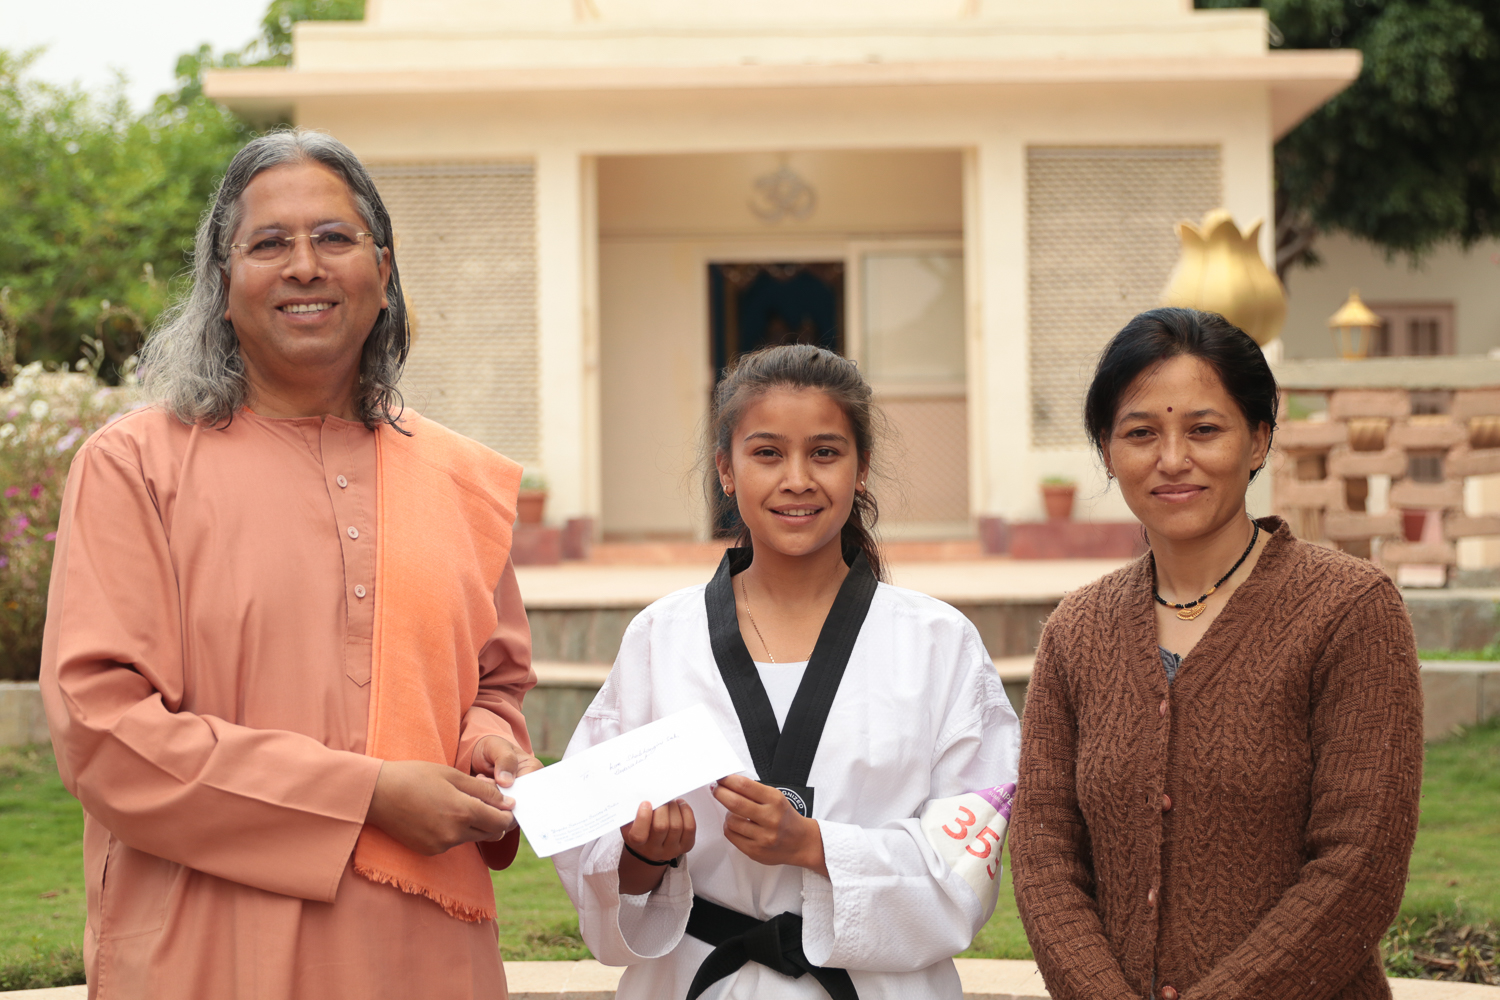 Swami Vasudevananda presents scholarship to Kum. Alisha, a third year engineering student